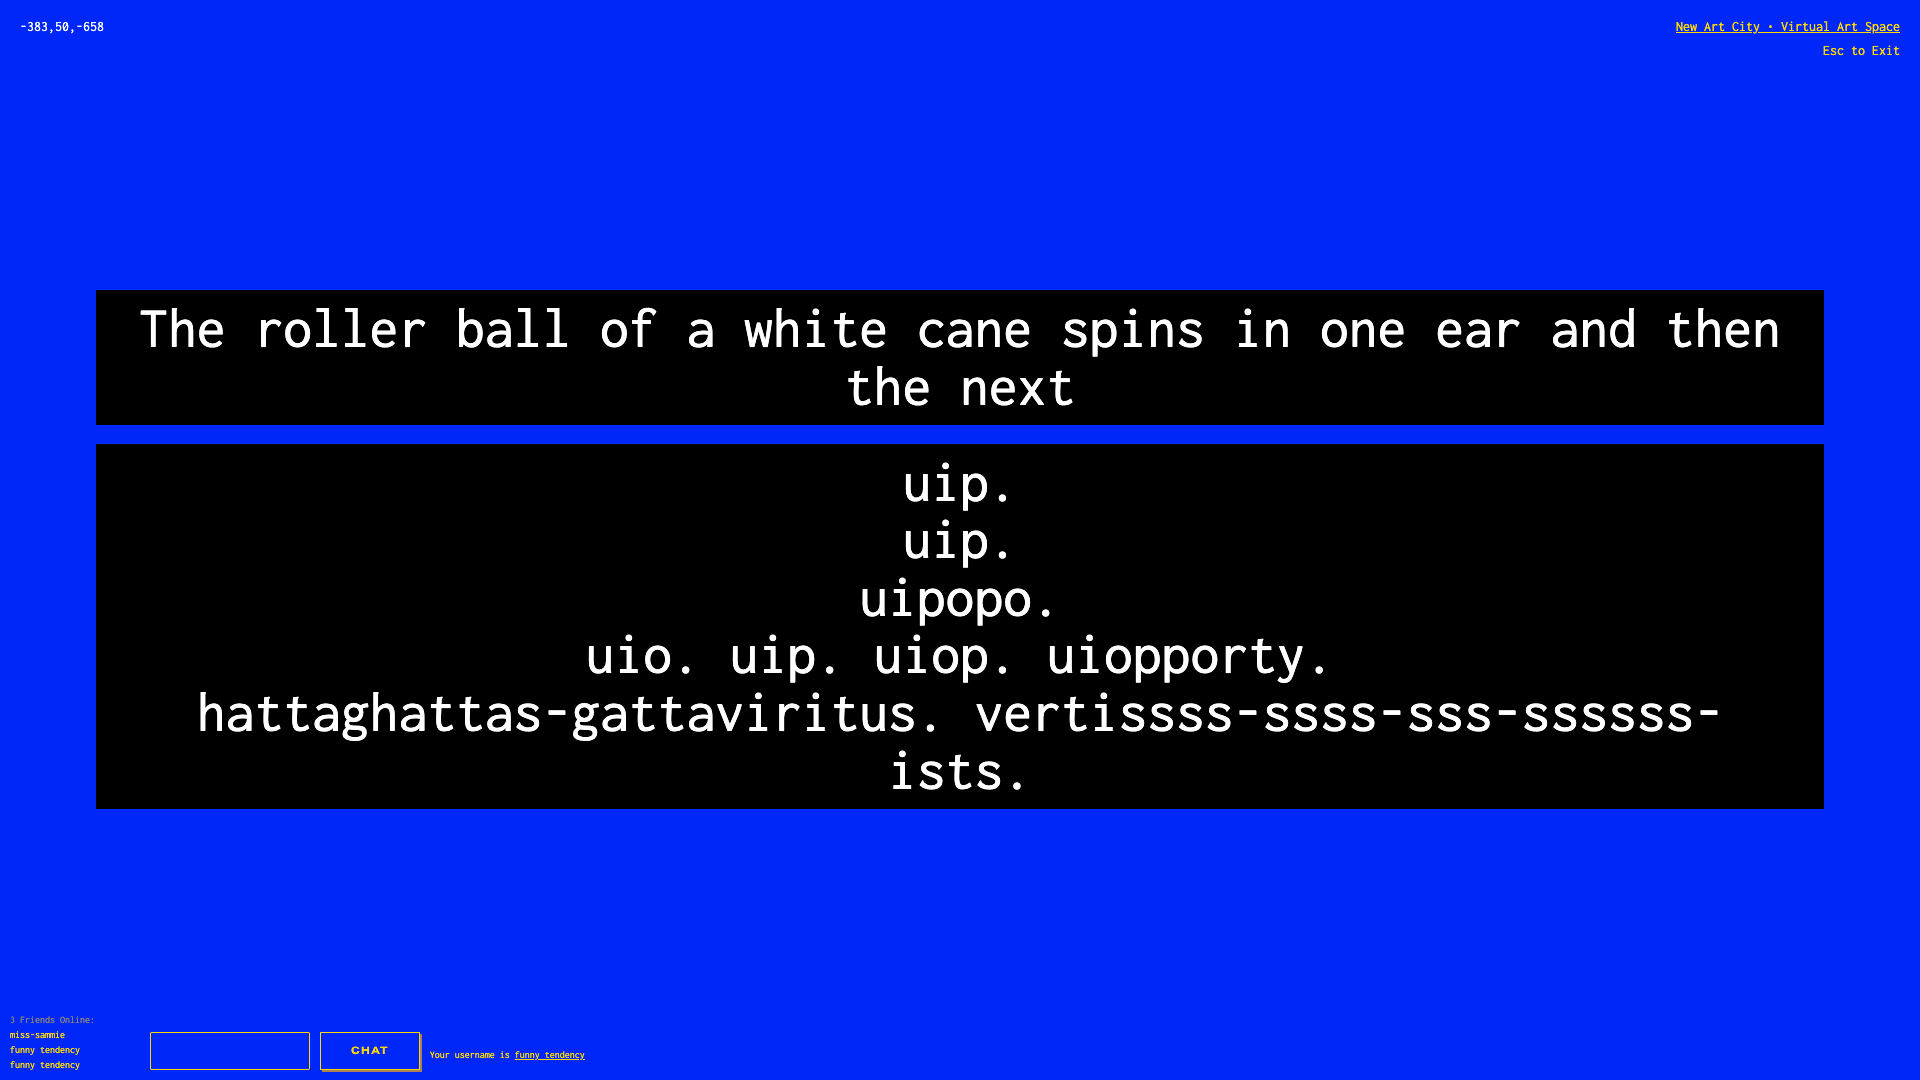 Deepl blue screenshot, in middle "The roller ball of a white cane spins in one ear and then the next" "uip. uip. uipopo. uio. uip. uiop. uiopporty. hattaghattas-gattaviritus. vertissss-ssss-sss-ssssss-ists."